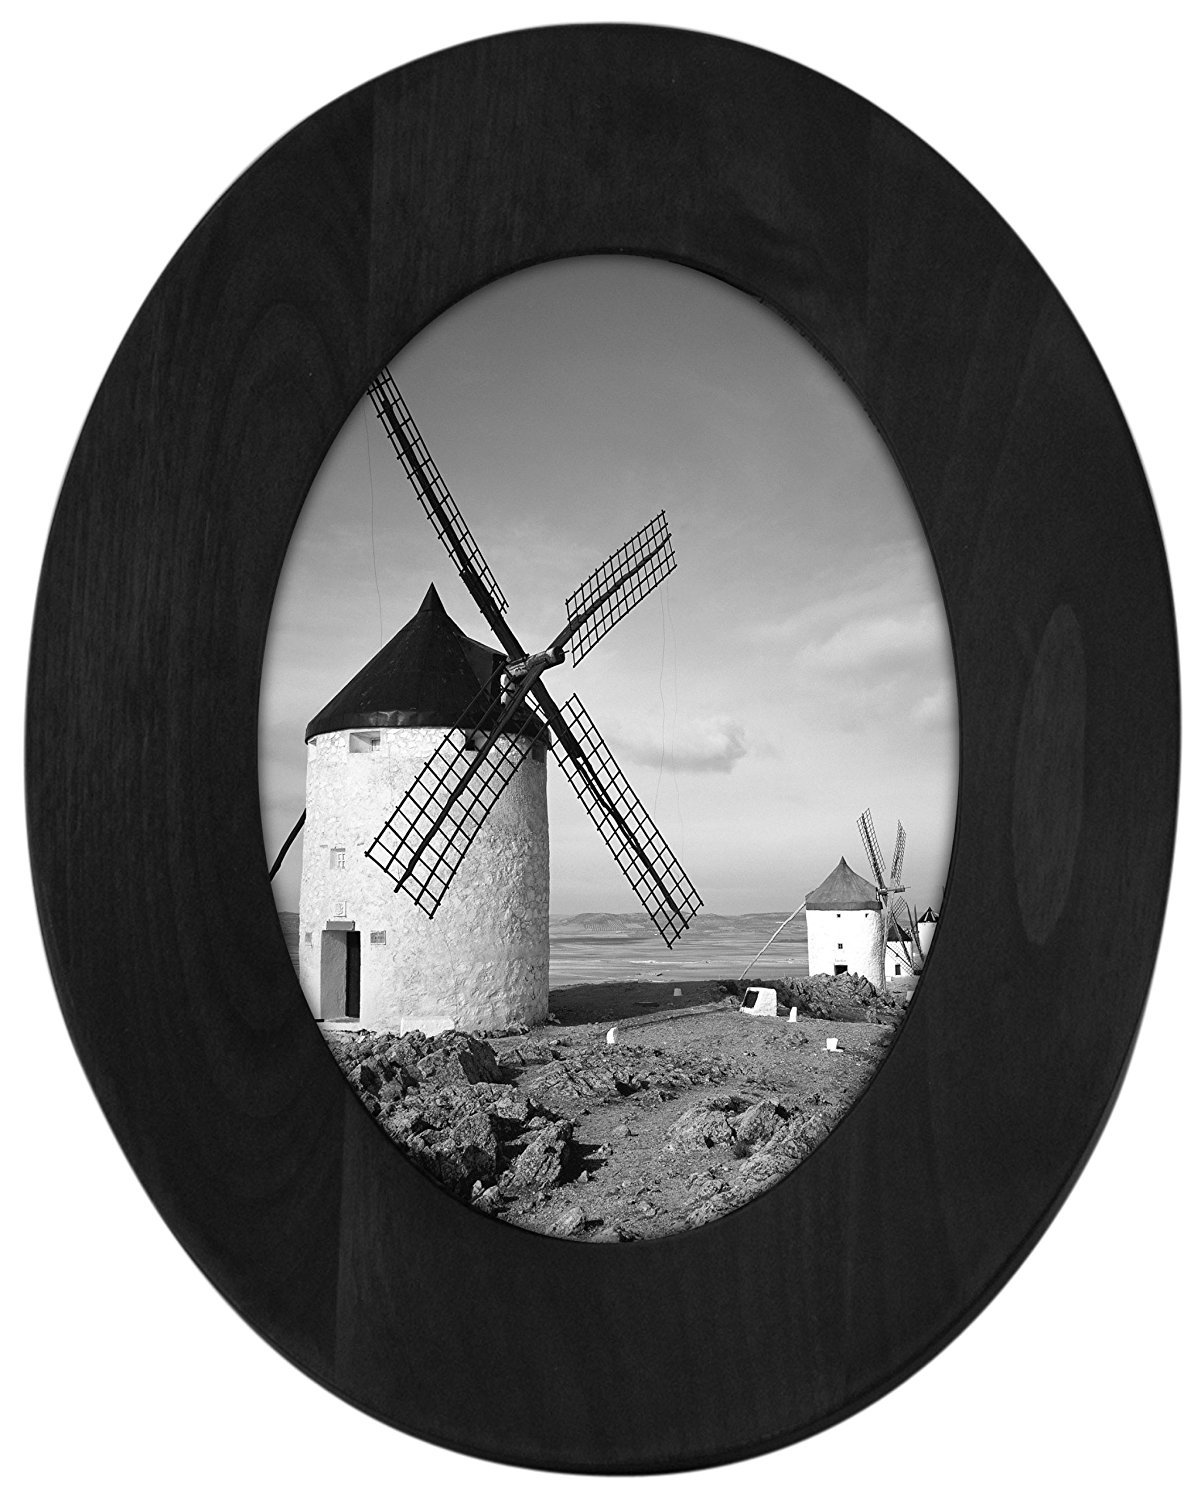 Malden International Designs Classic Oval Black Wood Picture Frame, 5x7, Black